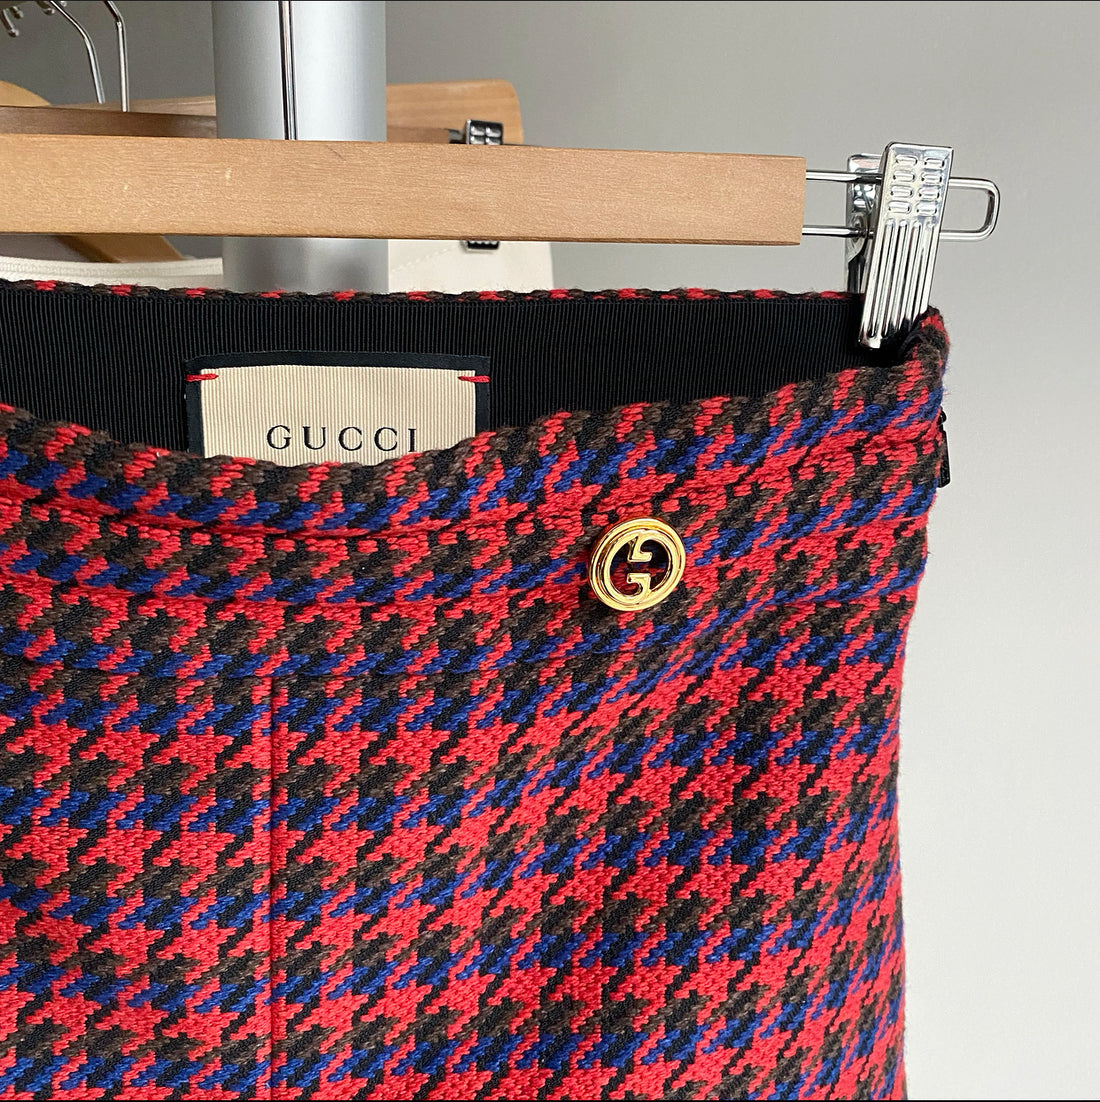 Gucci Red, Green, Blue Check Tweed Mini Skirt - XS / 25" waist